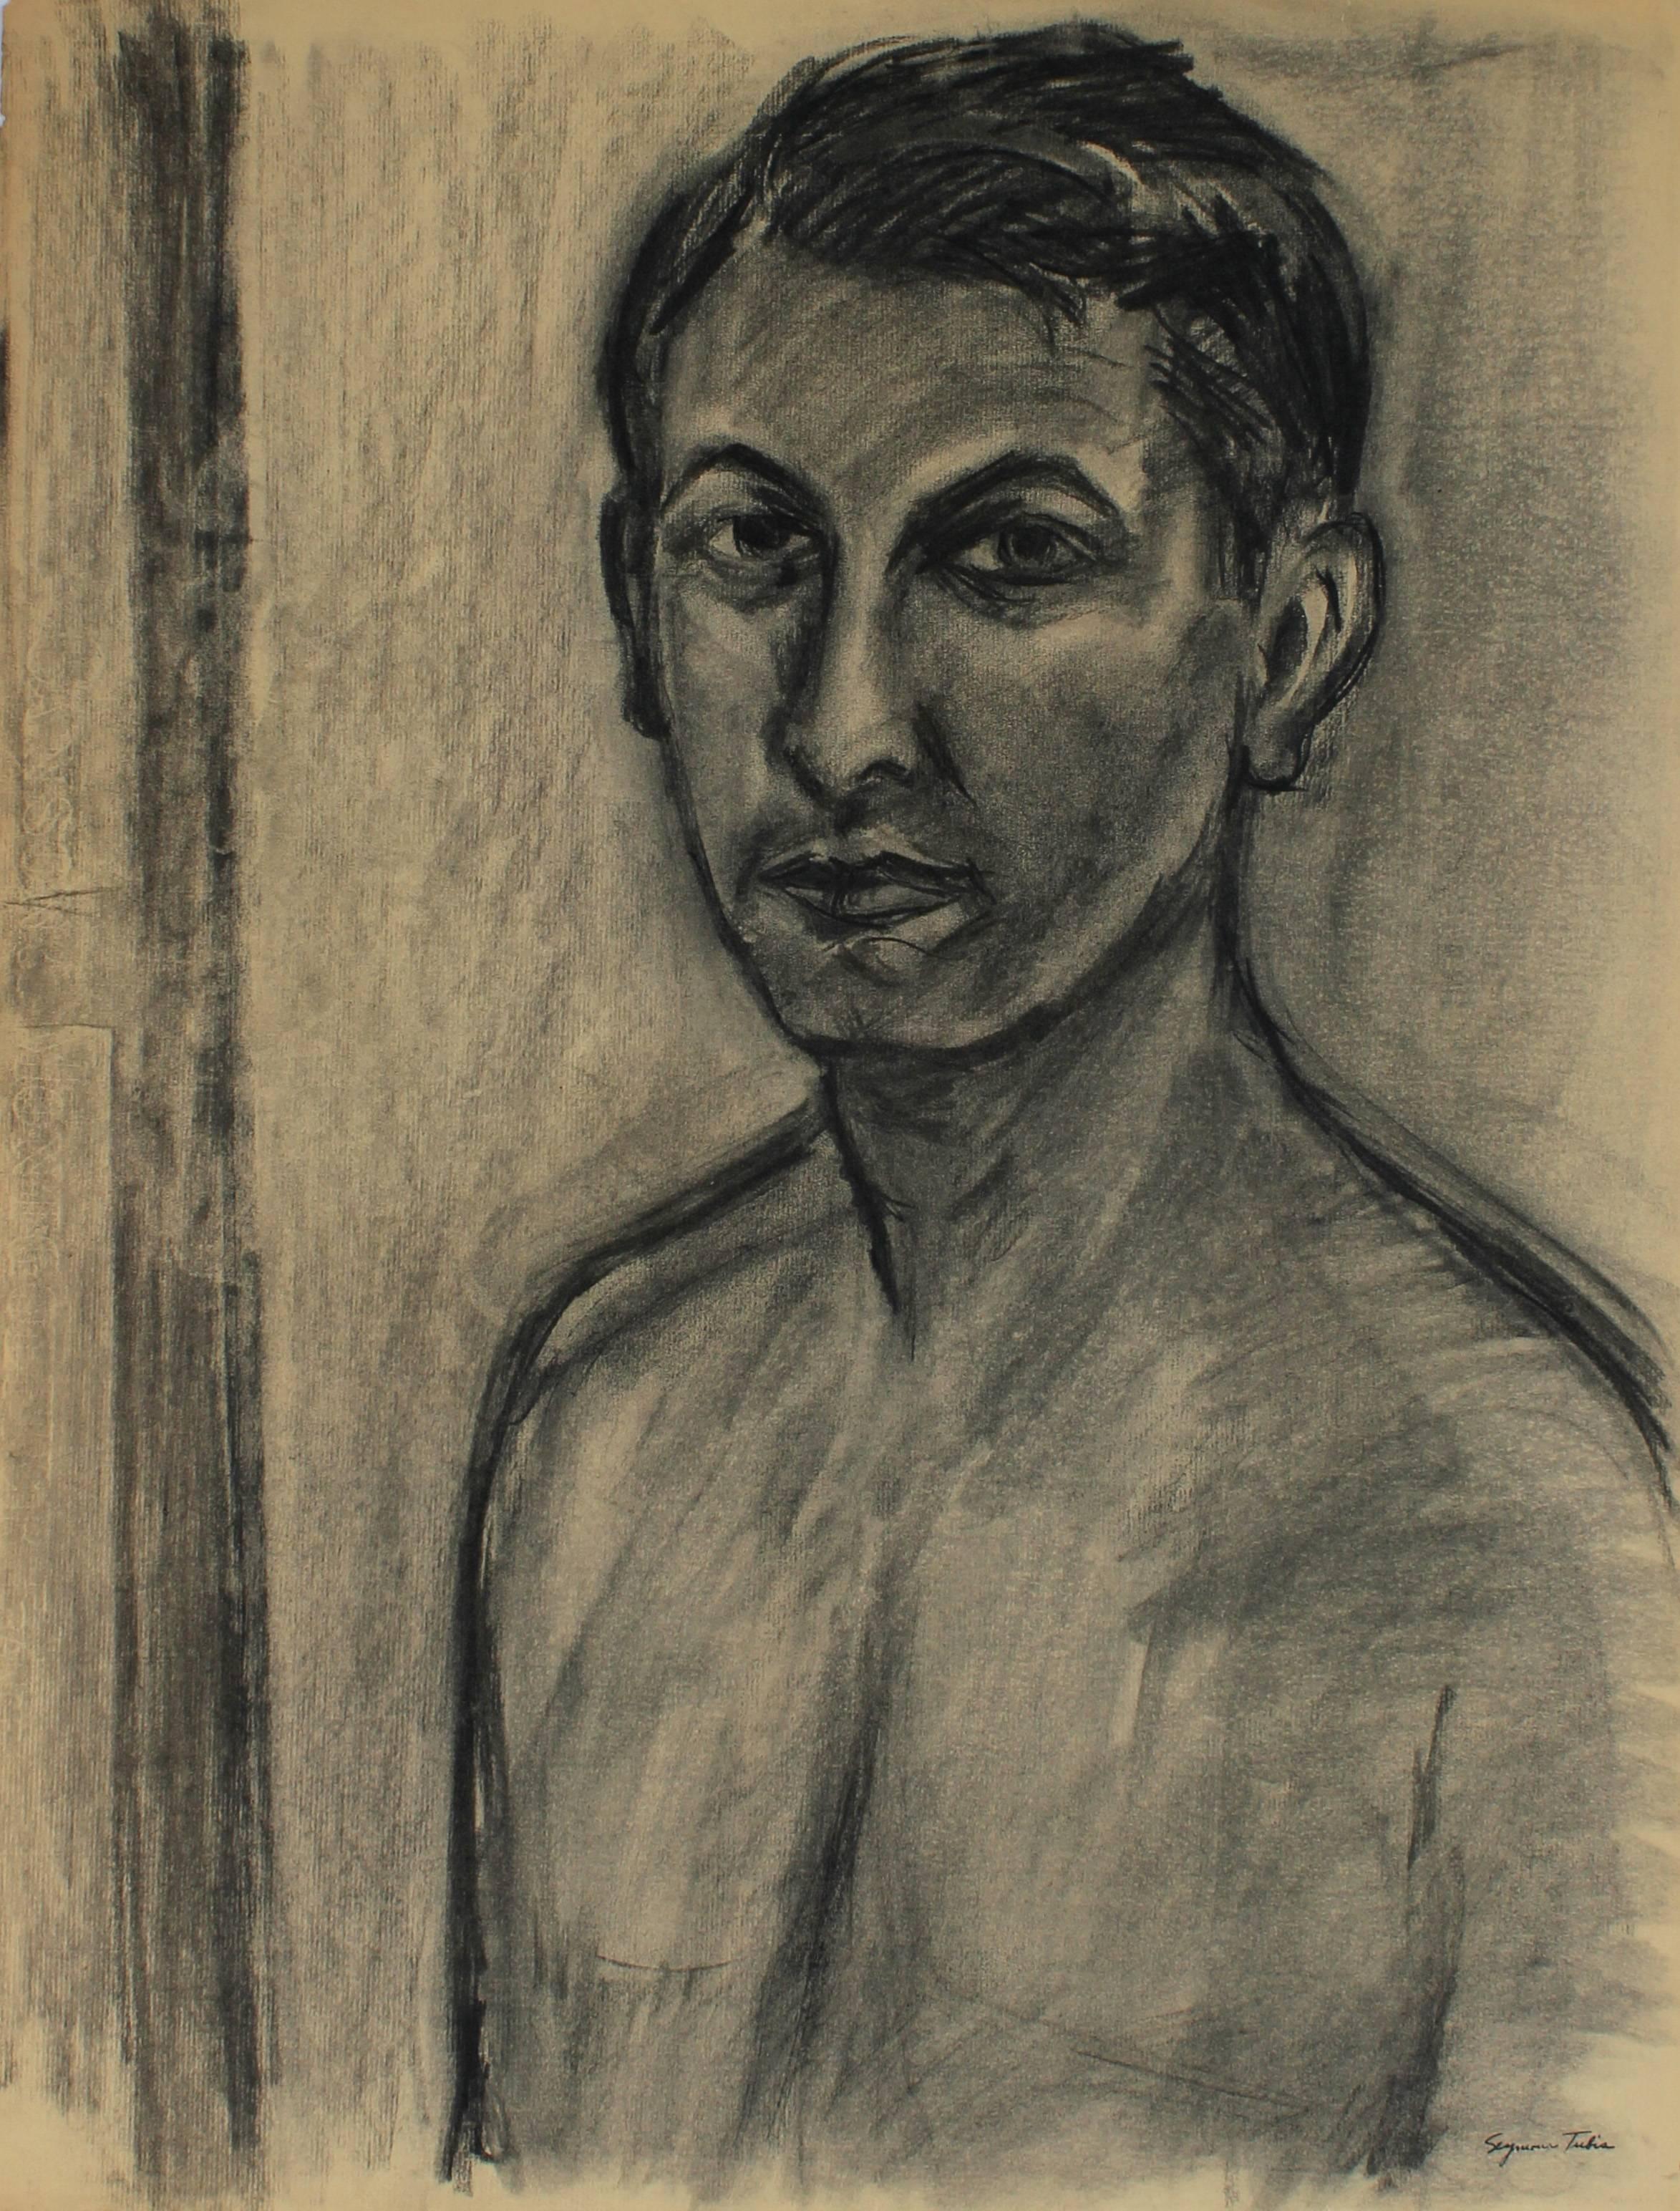 Artist Self Portrait in Charcoal, Circa 1950